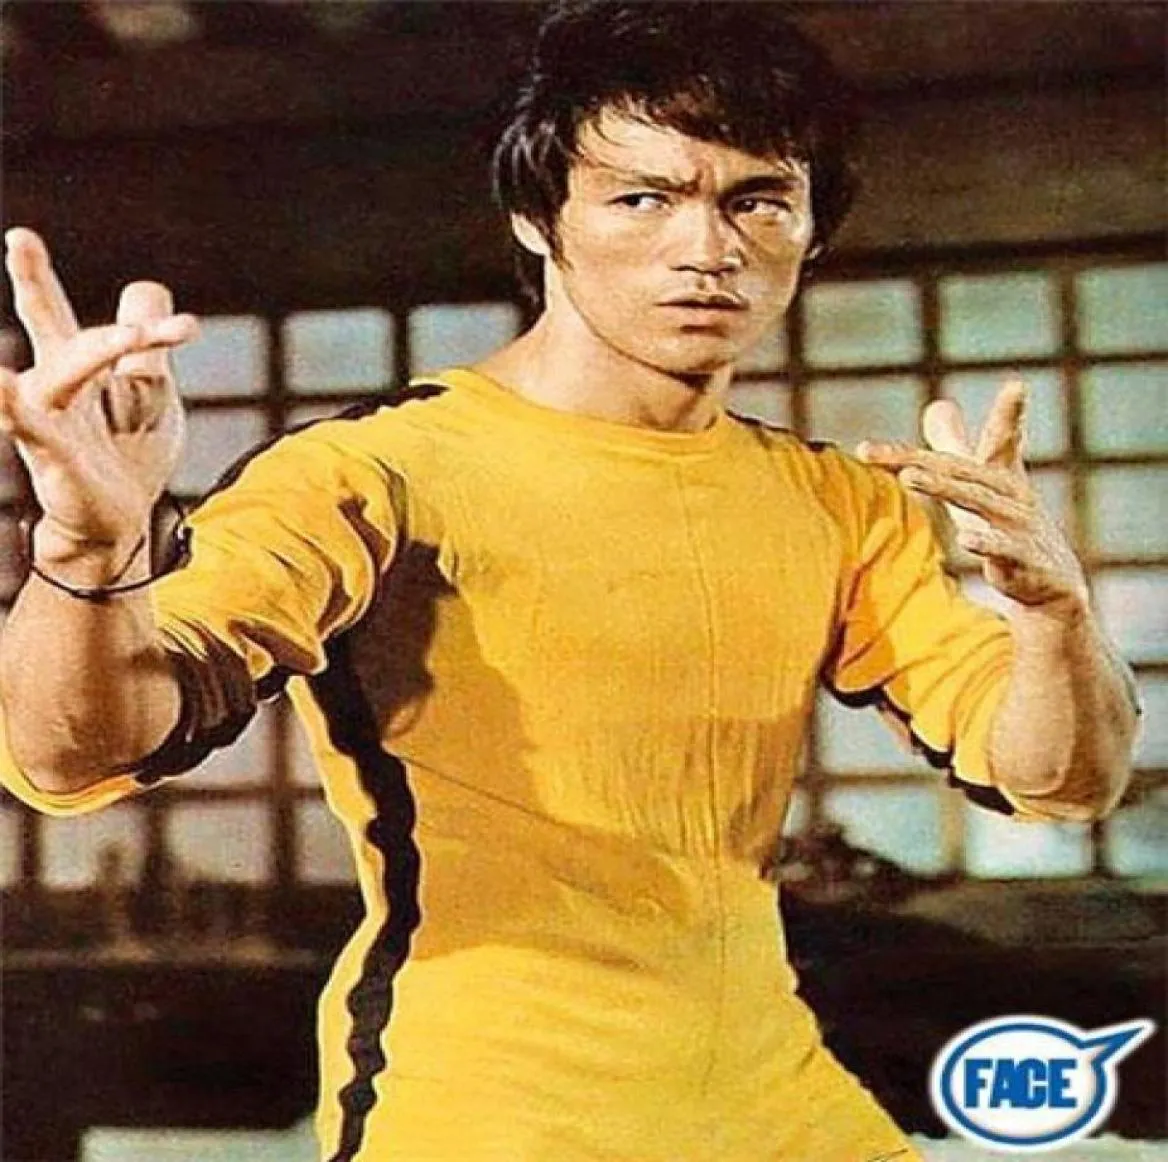 Nowy Jeet Kune Do Game of Death Costume kombinezon Bruce Lee Classic Yellow Kung Fu Mundlids Cosplay JKD3087232